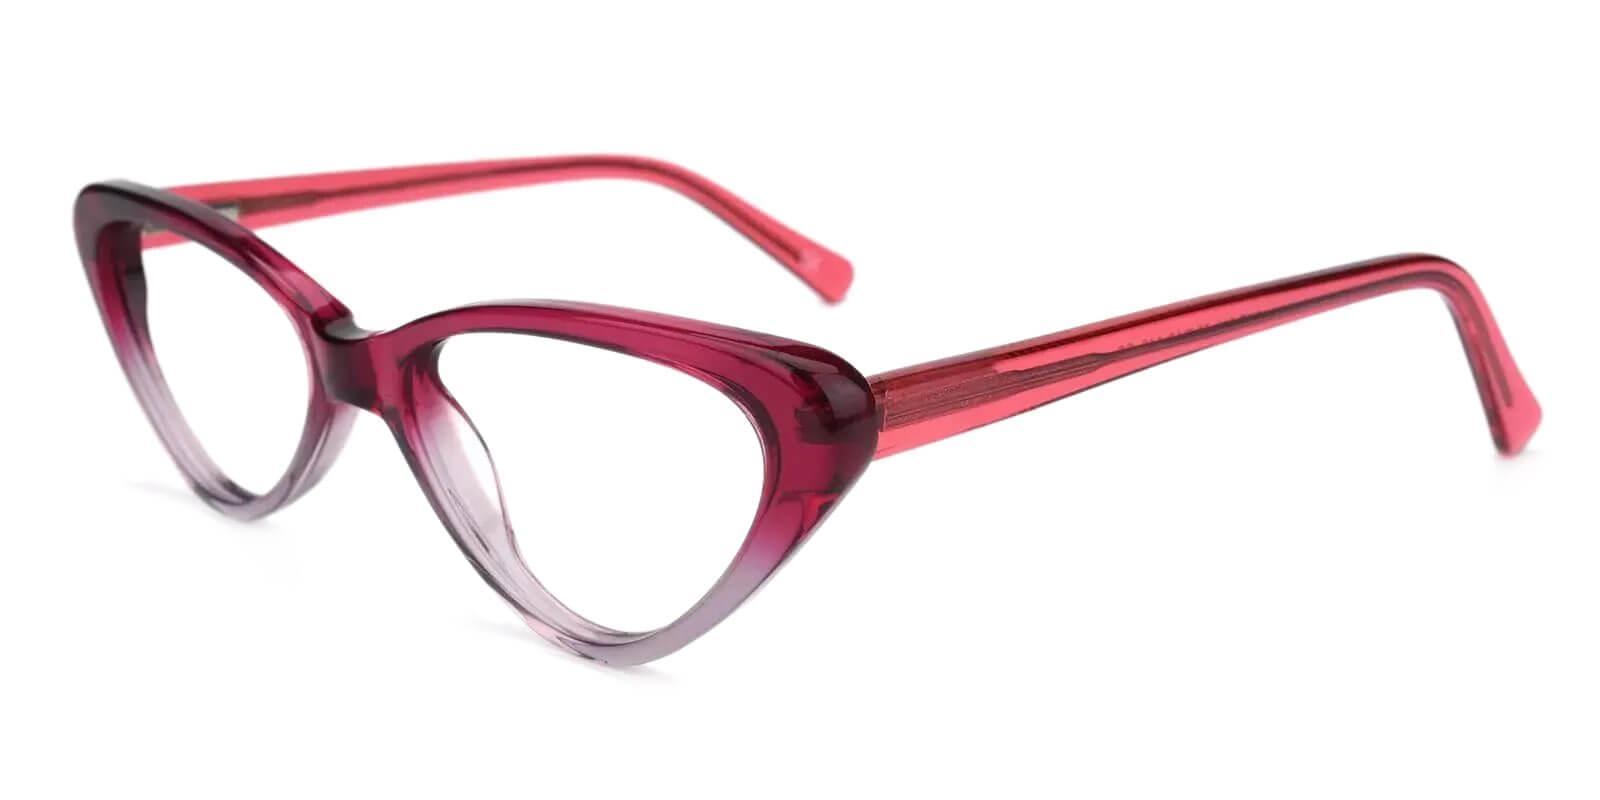 Selina Purple Acetate Eyeglasses , SpringHinges , UniversalBridgeFit Frames from ABBE Glasses